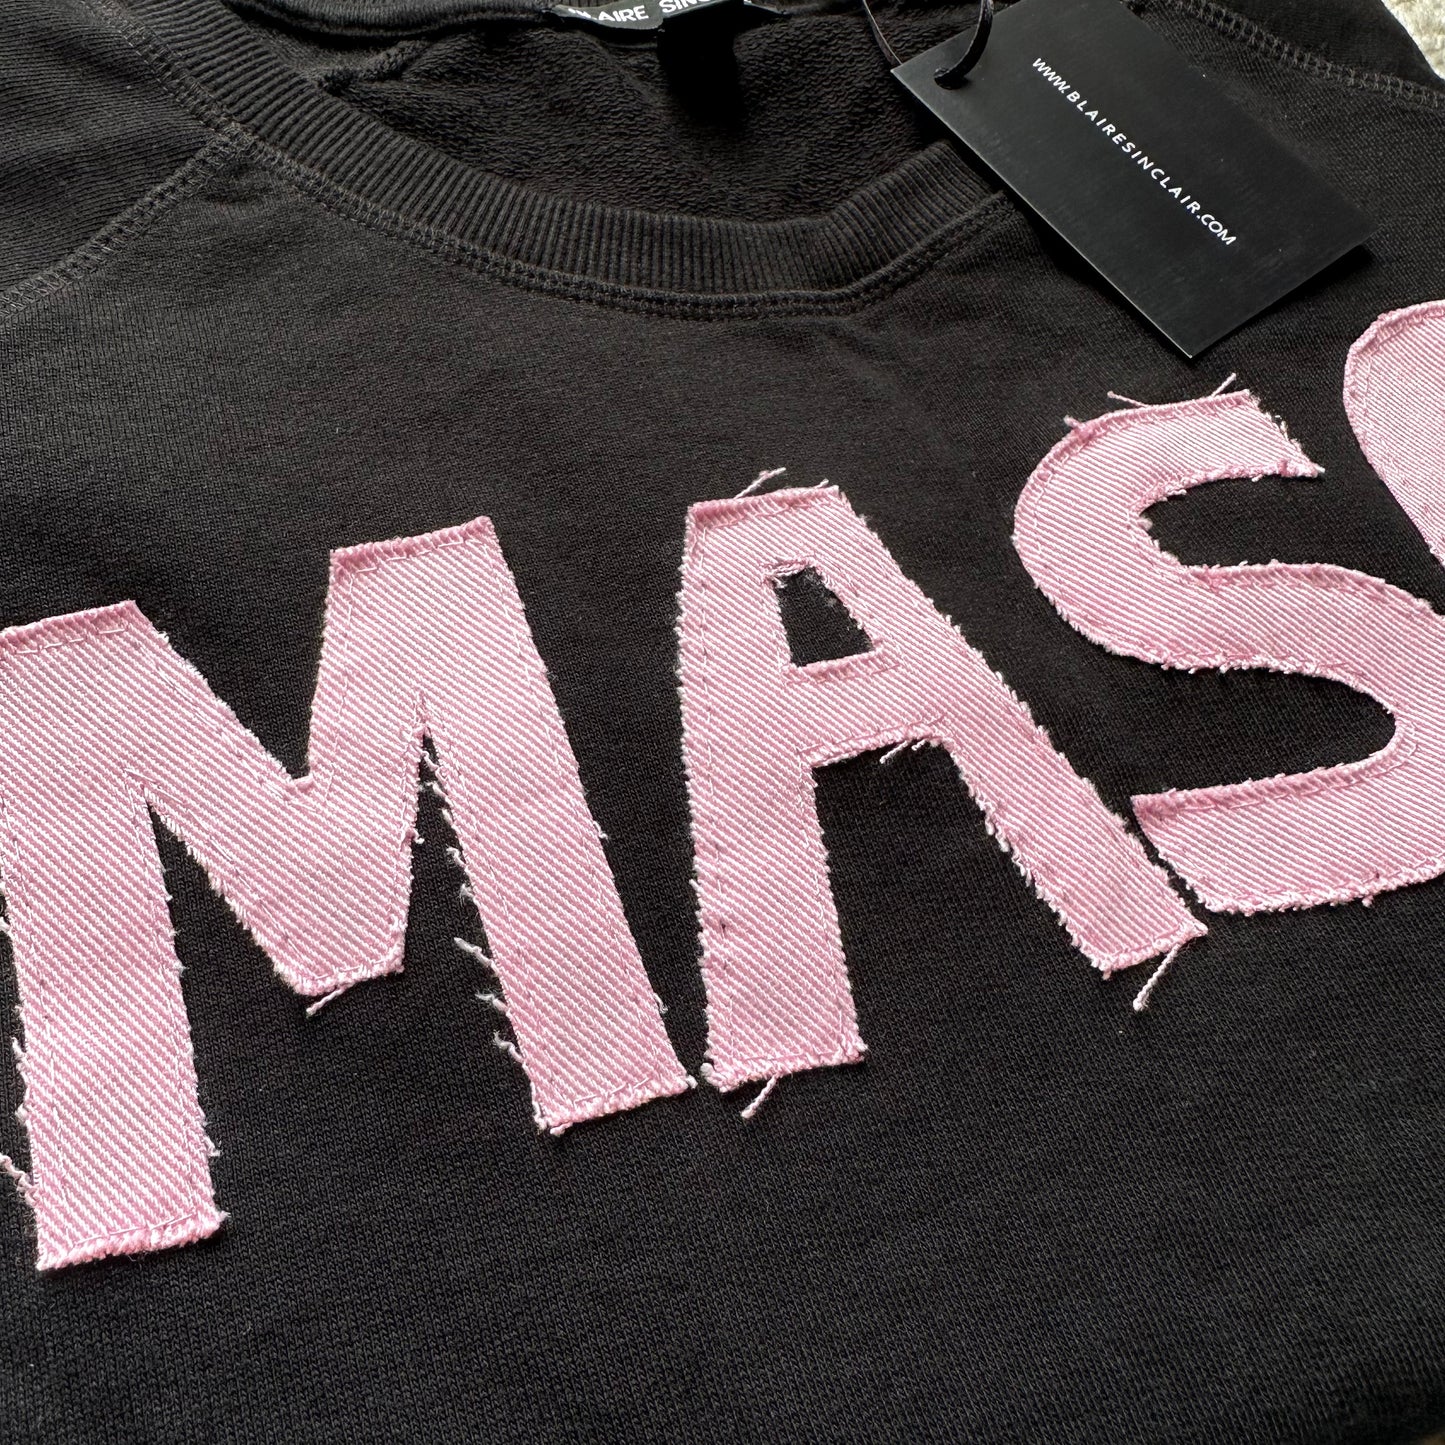 Handmade Pink MASC Earth Positive Recycled Slogan Sweatshirt Medium